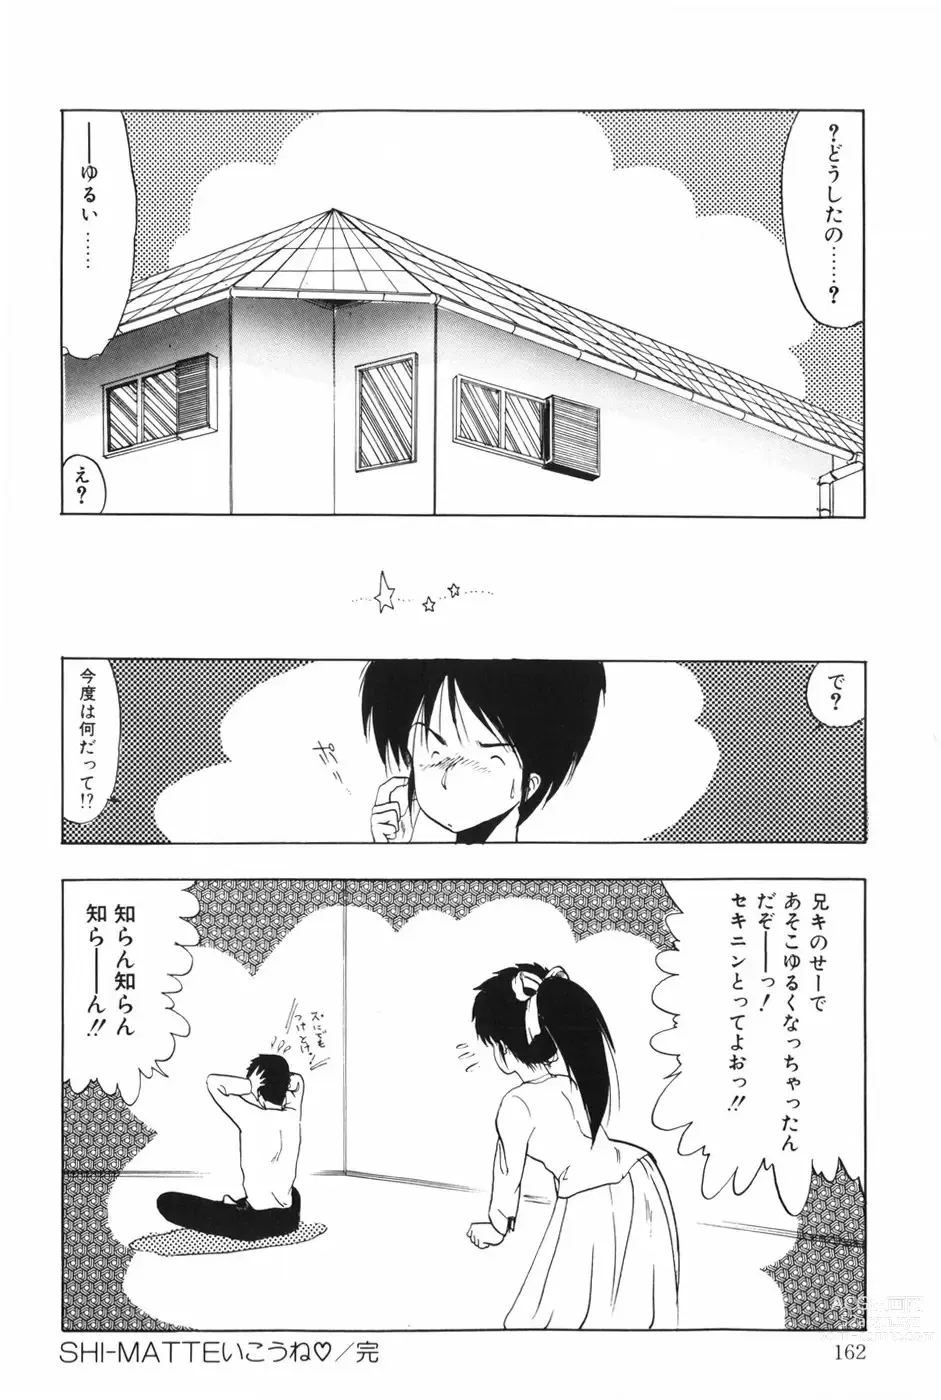 Page 168 of manga POSSESSION